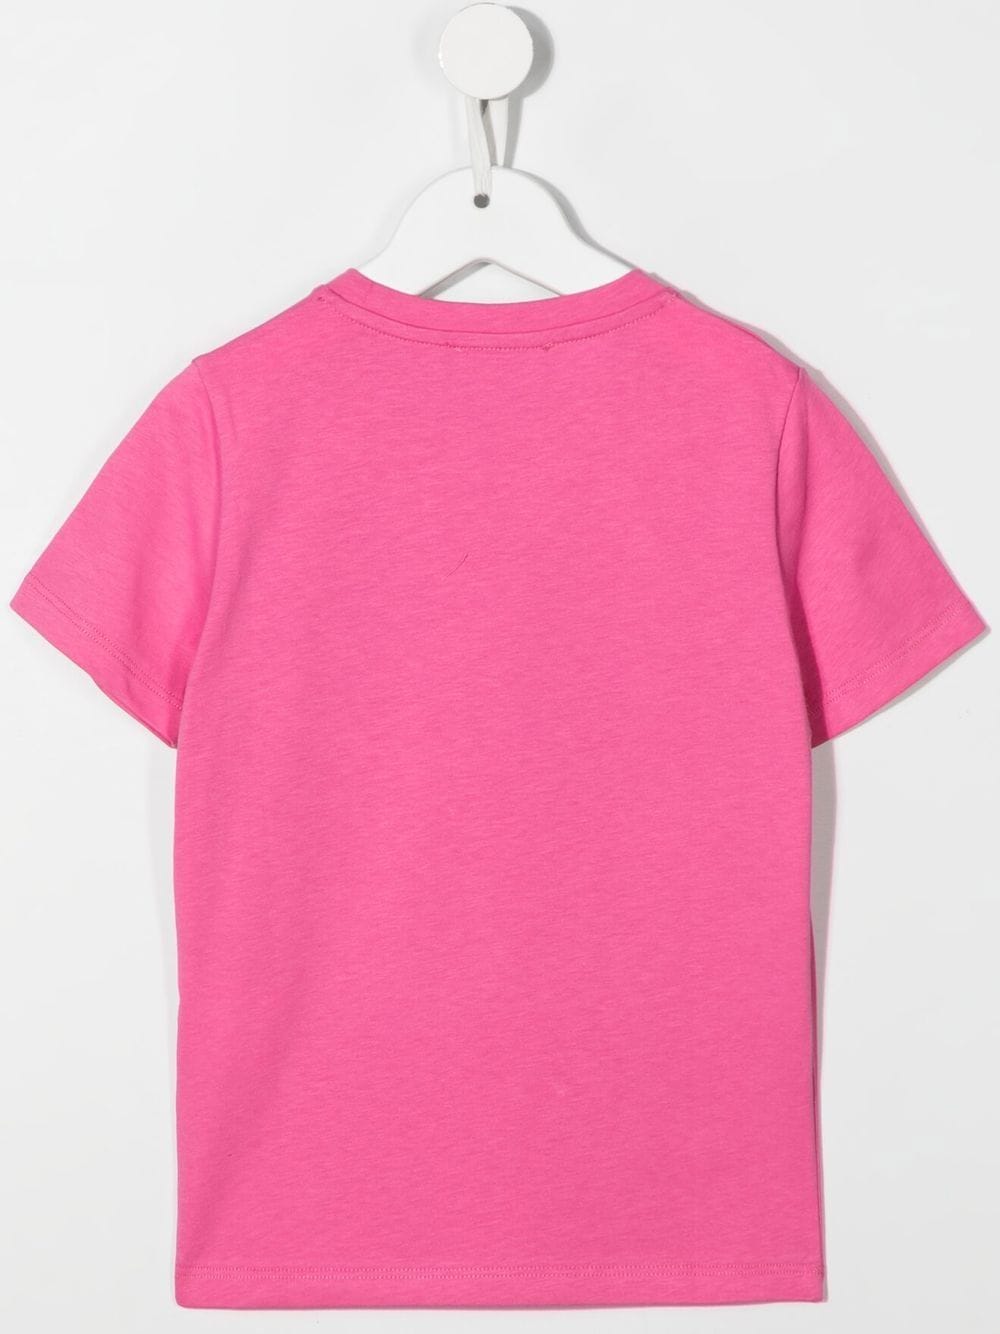 Versace Kids logo-print cotton dress set - Pink